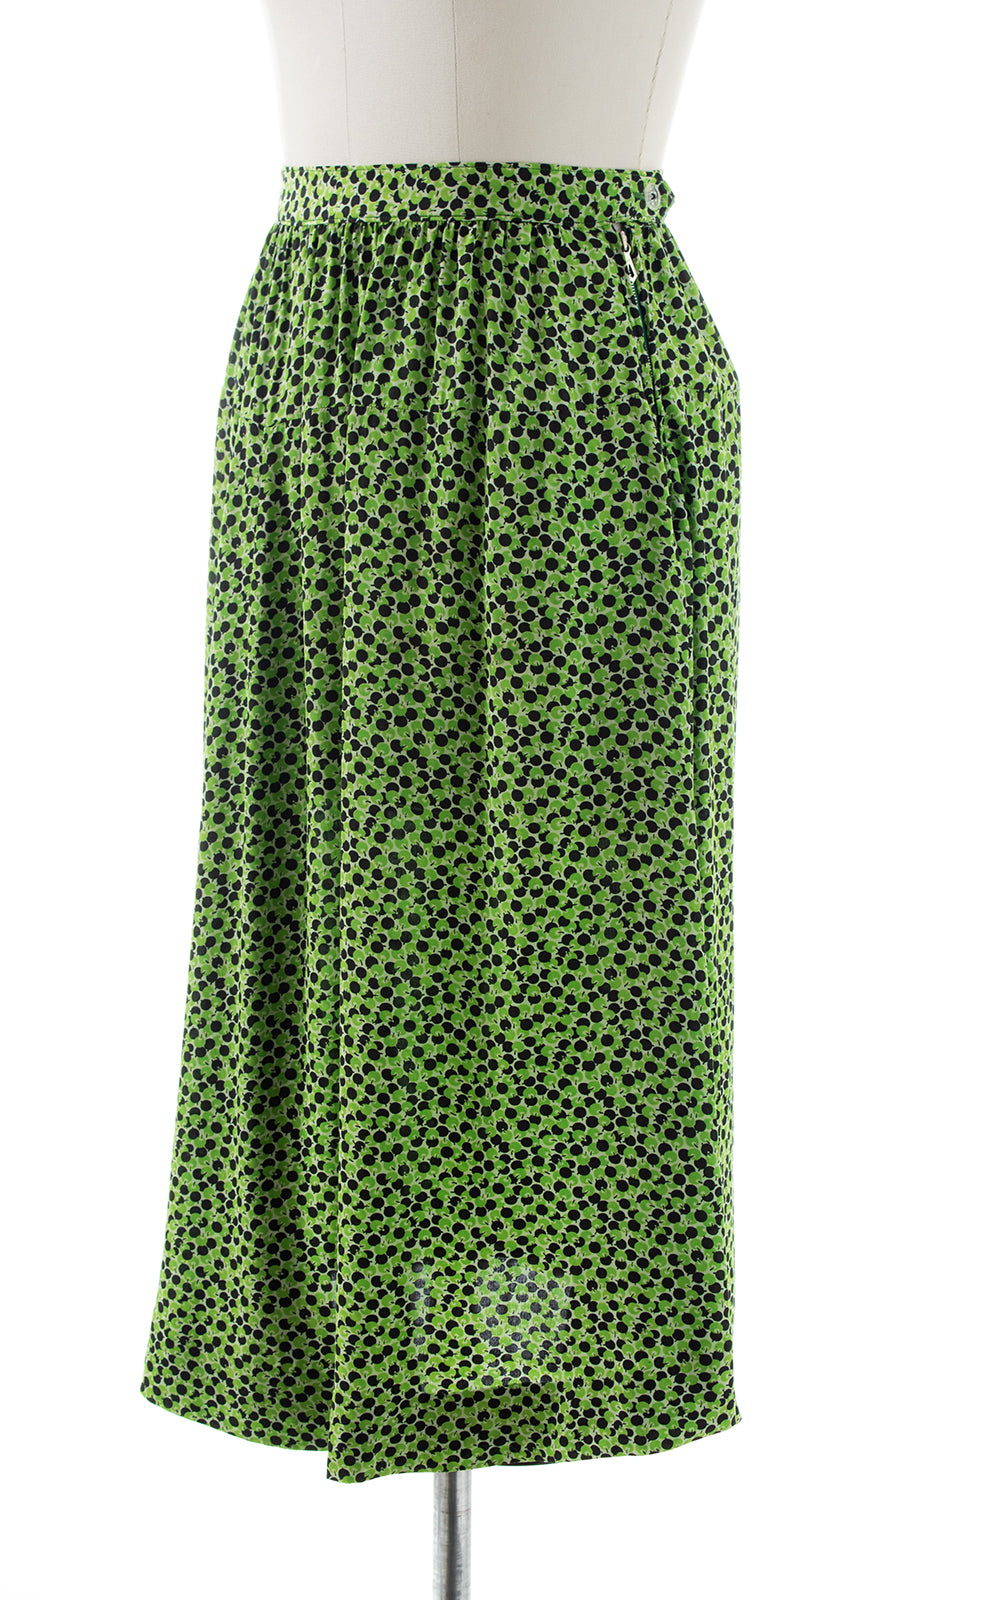 1940s Apples or Olives Novelty Print Rayon Skirt | small/medium